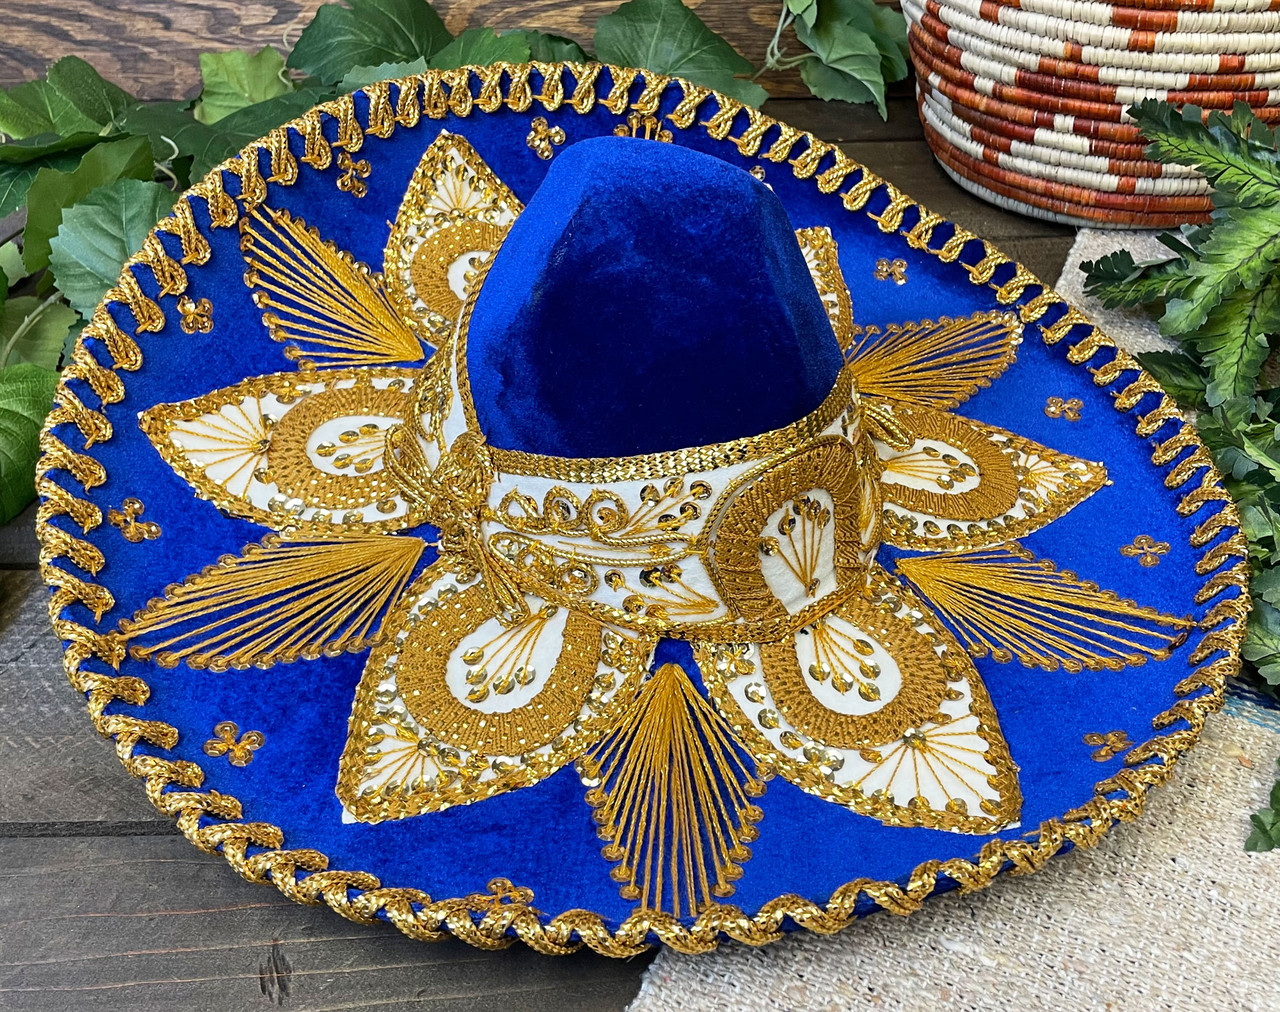 Mexico Mexican Cowboy boots hat Map Charm Bracelet necklace